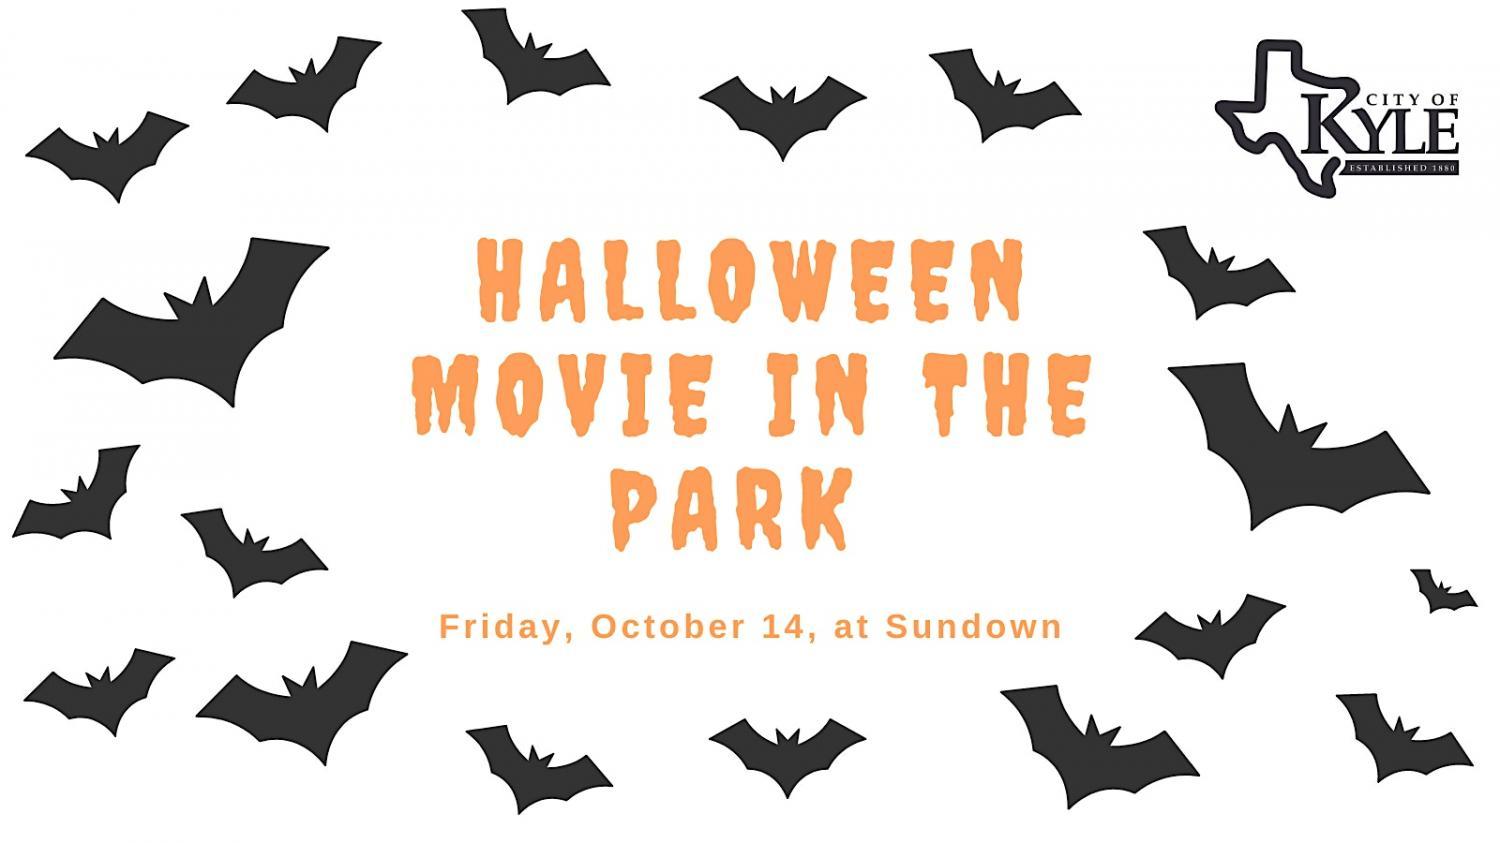 Halloween Movie in the Park
Fri Oct 14, 7:00 PM - Fri Oct 14, 10:00 PM